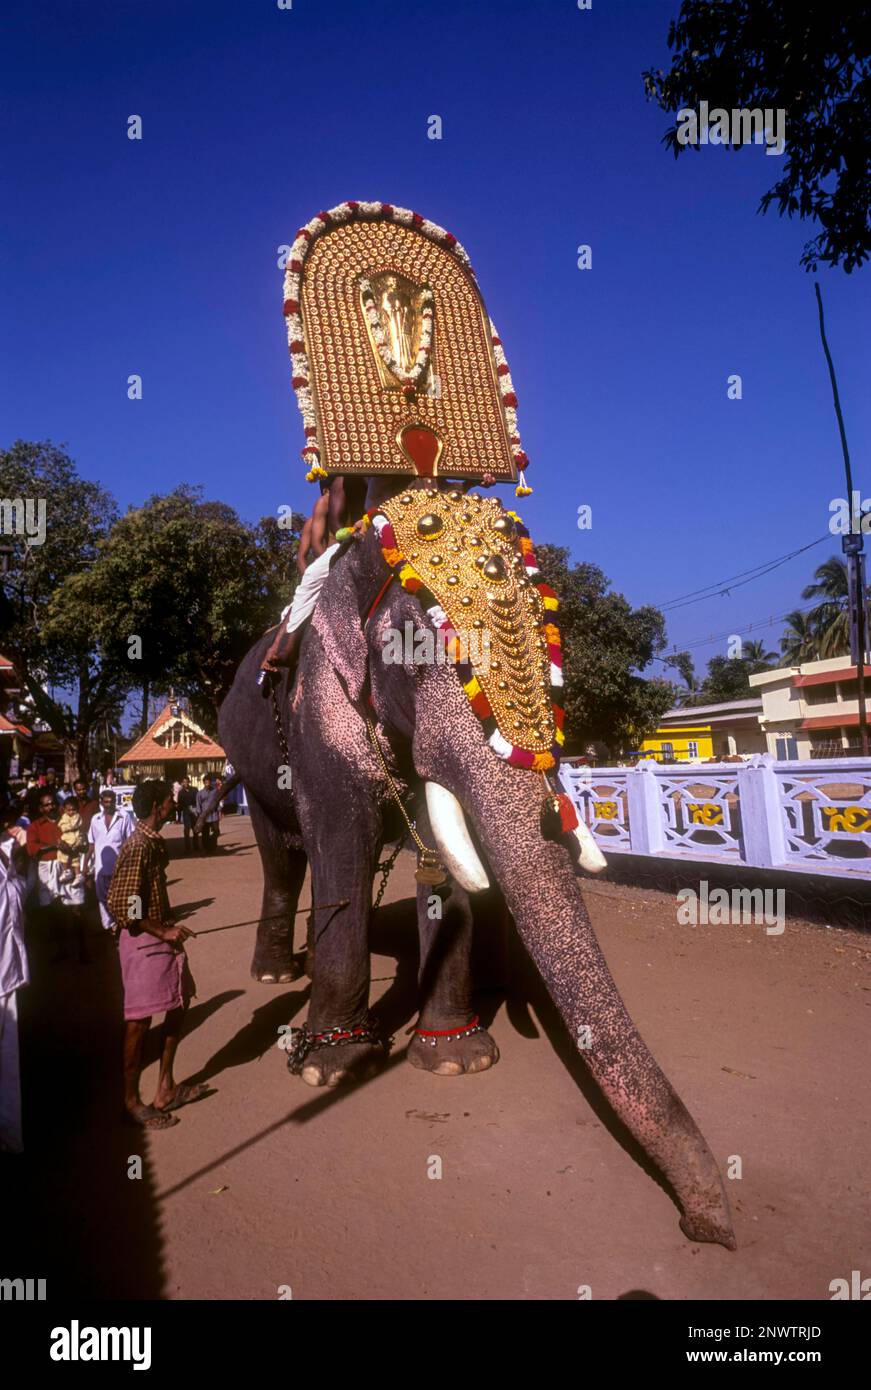 Caparisoned elephant in Thaipooya Mahotsavam at Sree Maheswara temple in Koorkencherry, Thrissur or Trichur, Kerala, India, Asia Stock Photo